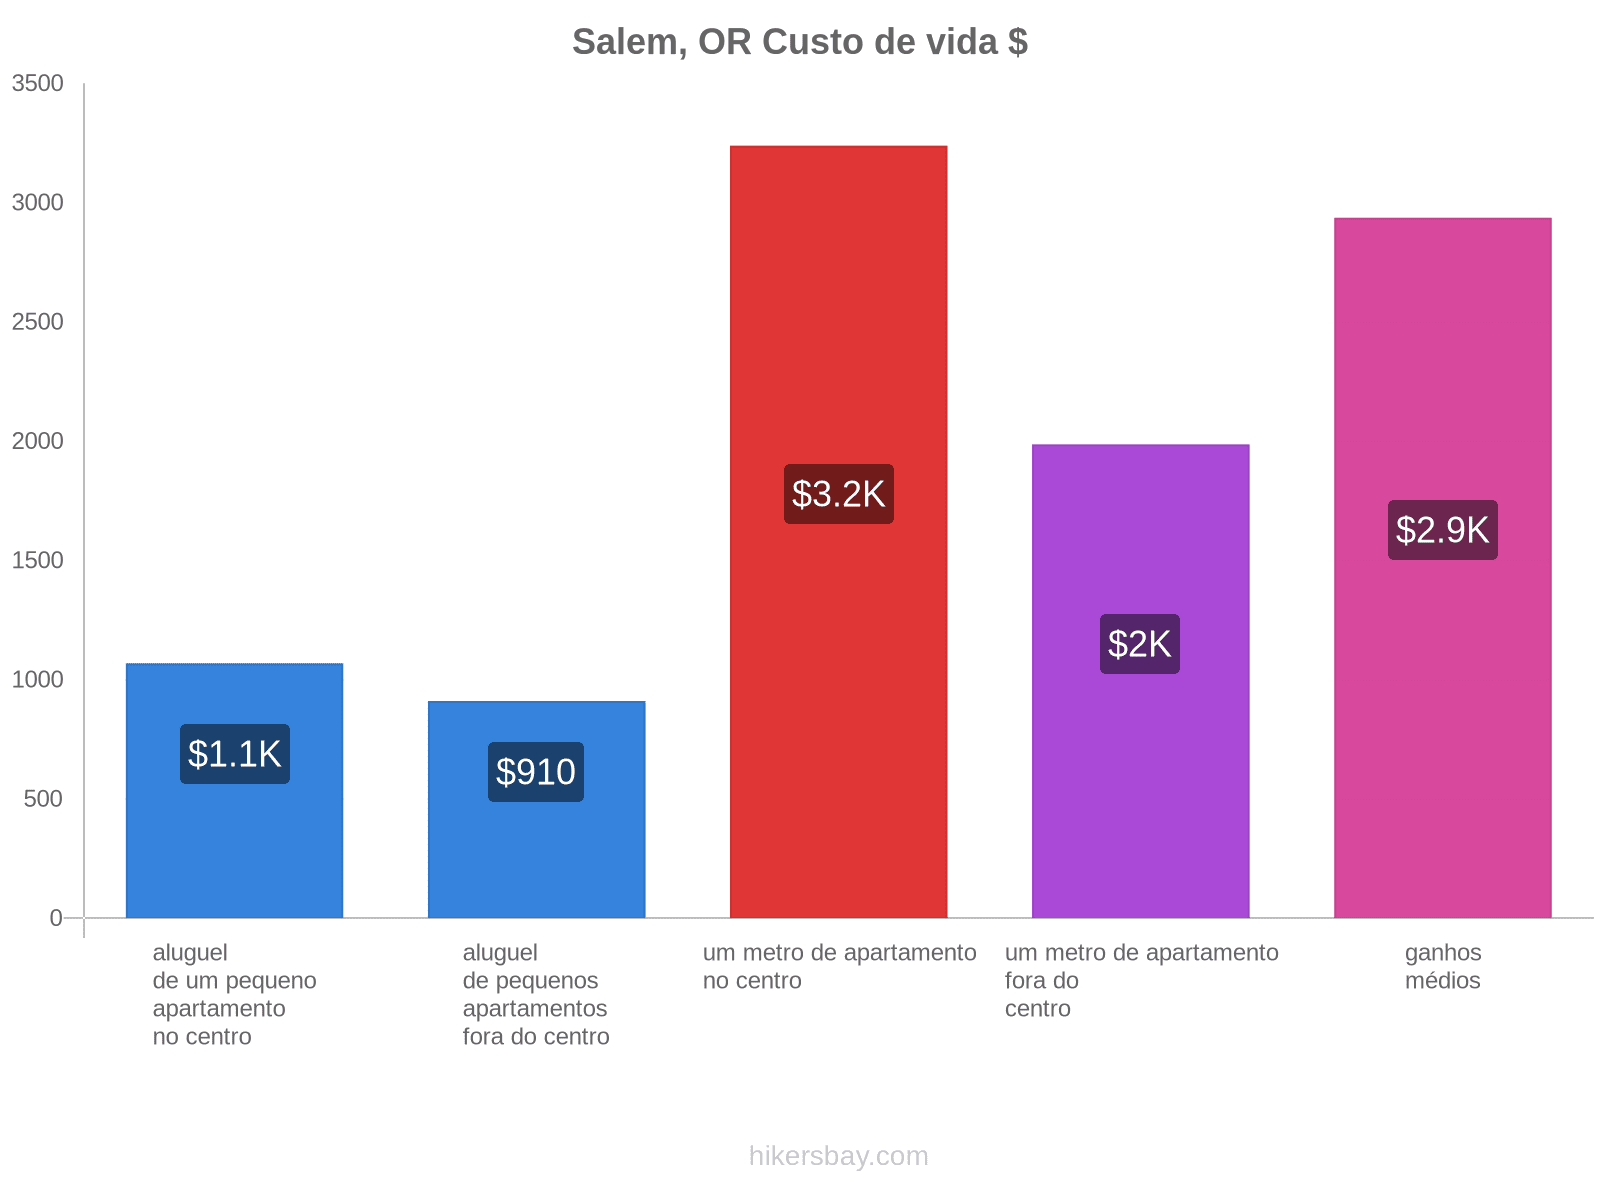 Salem, OR custo de vida hikersbay.com